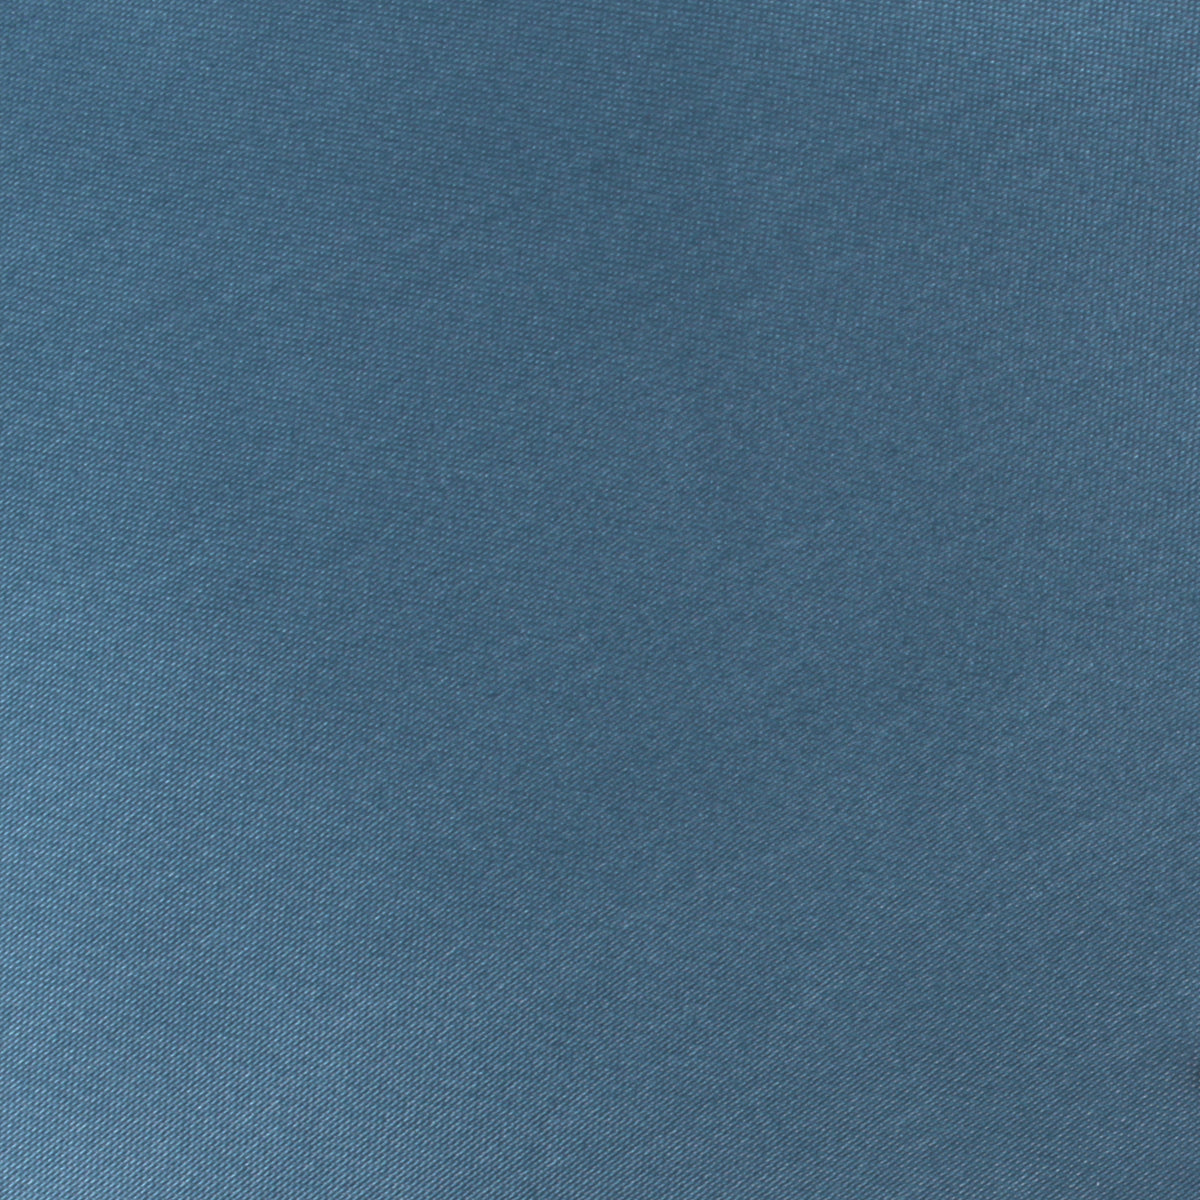 Coastal Blue Satin Fabric Swatch